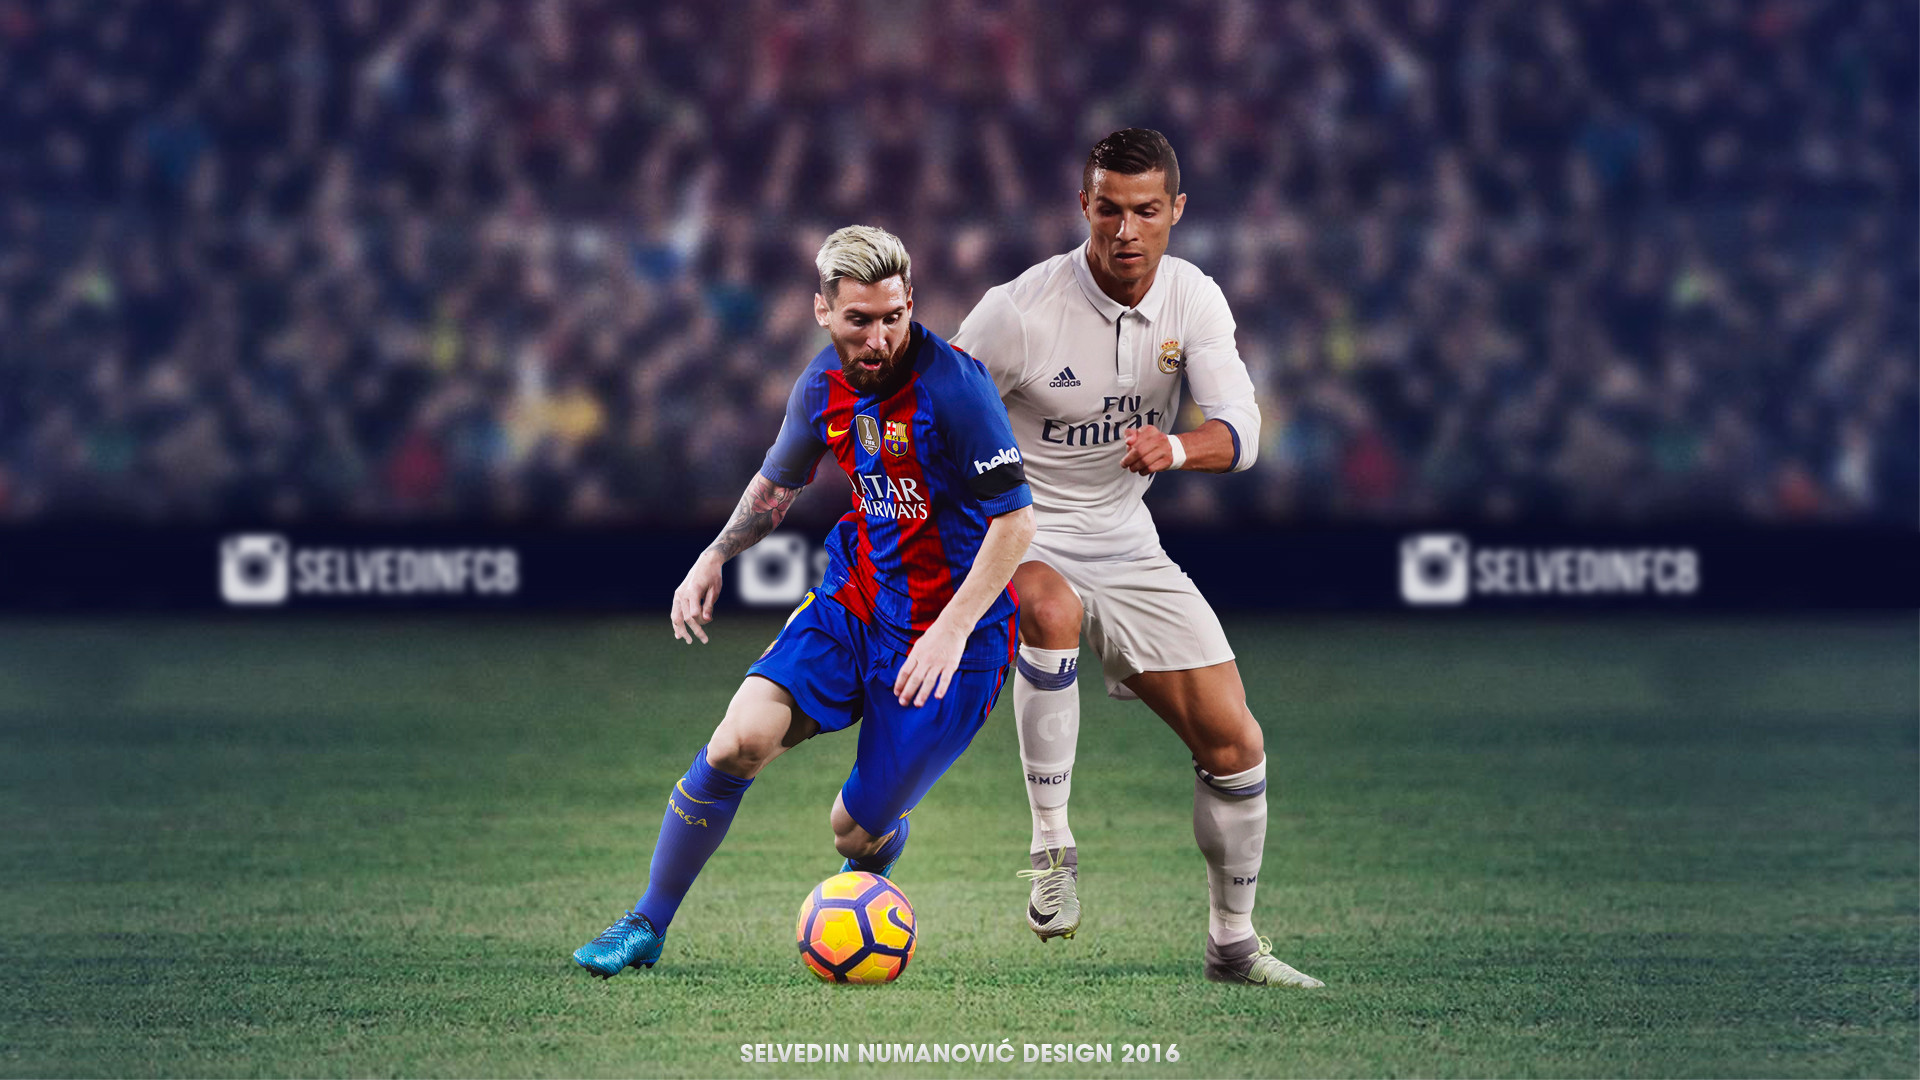 Ronaldo Vs Messi Wallpaper 2018 77 Images